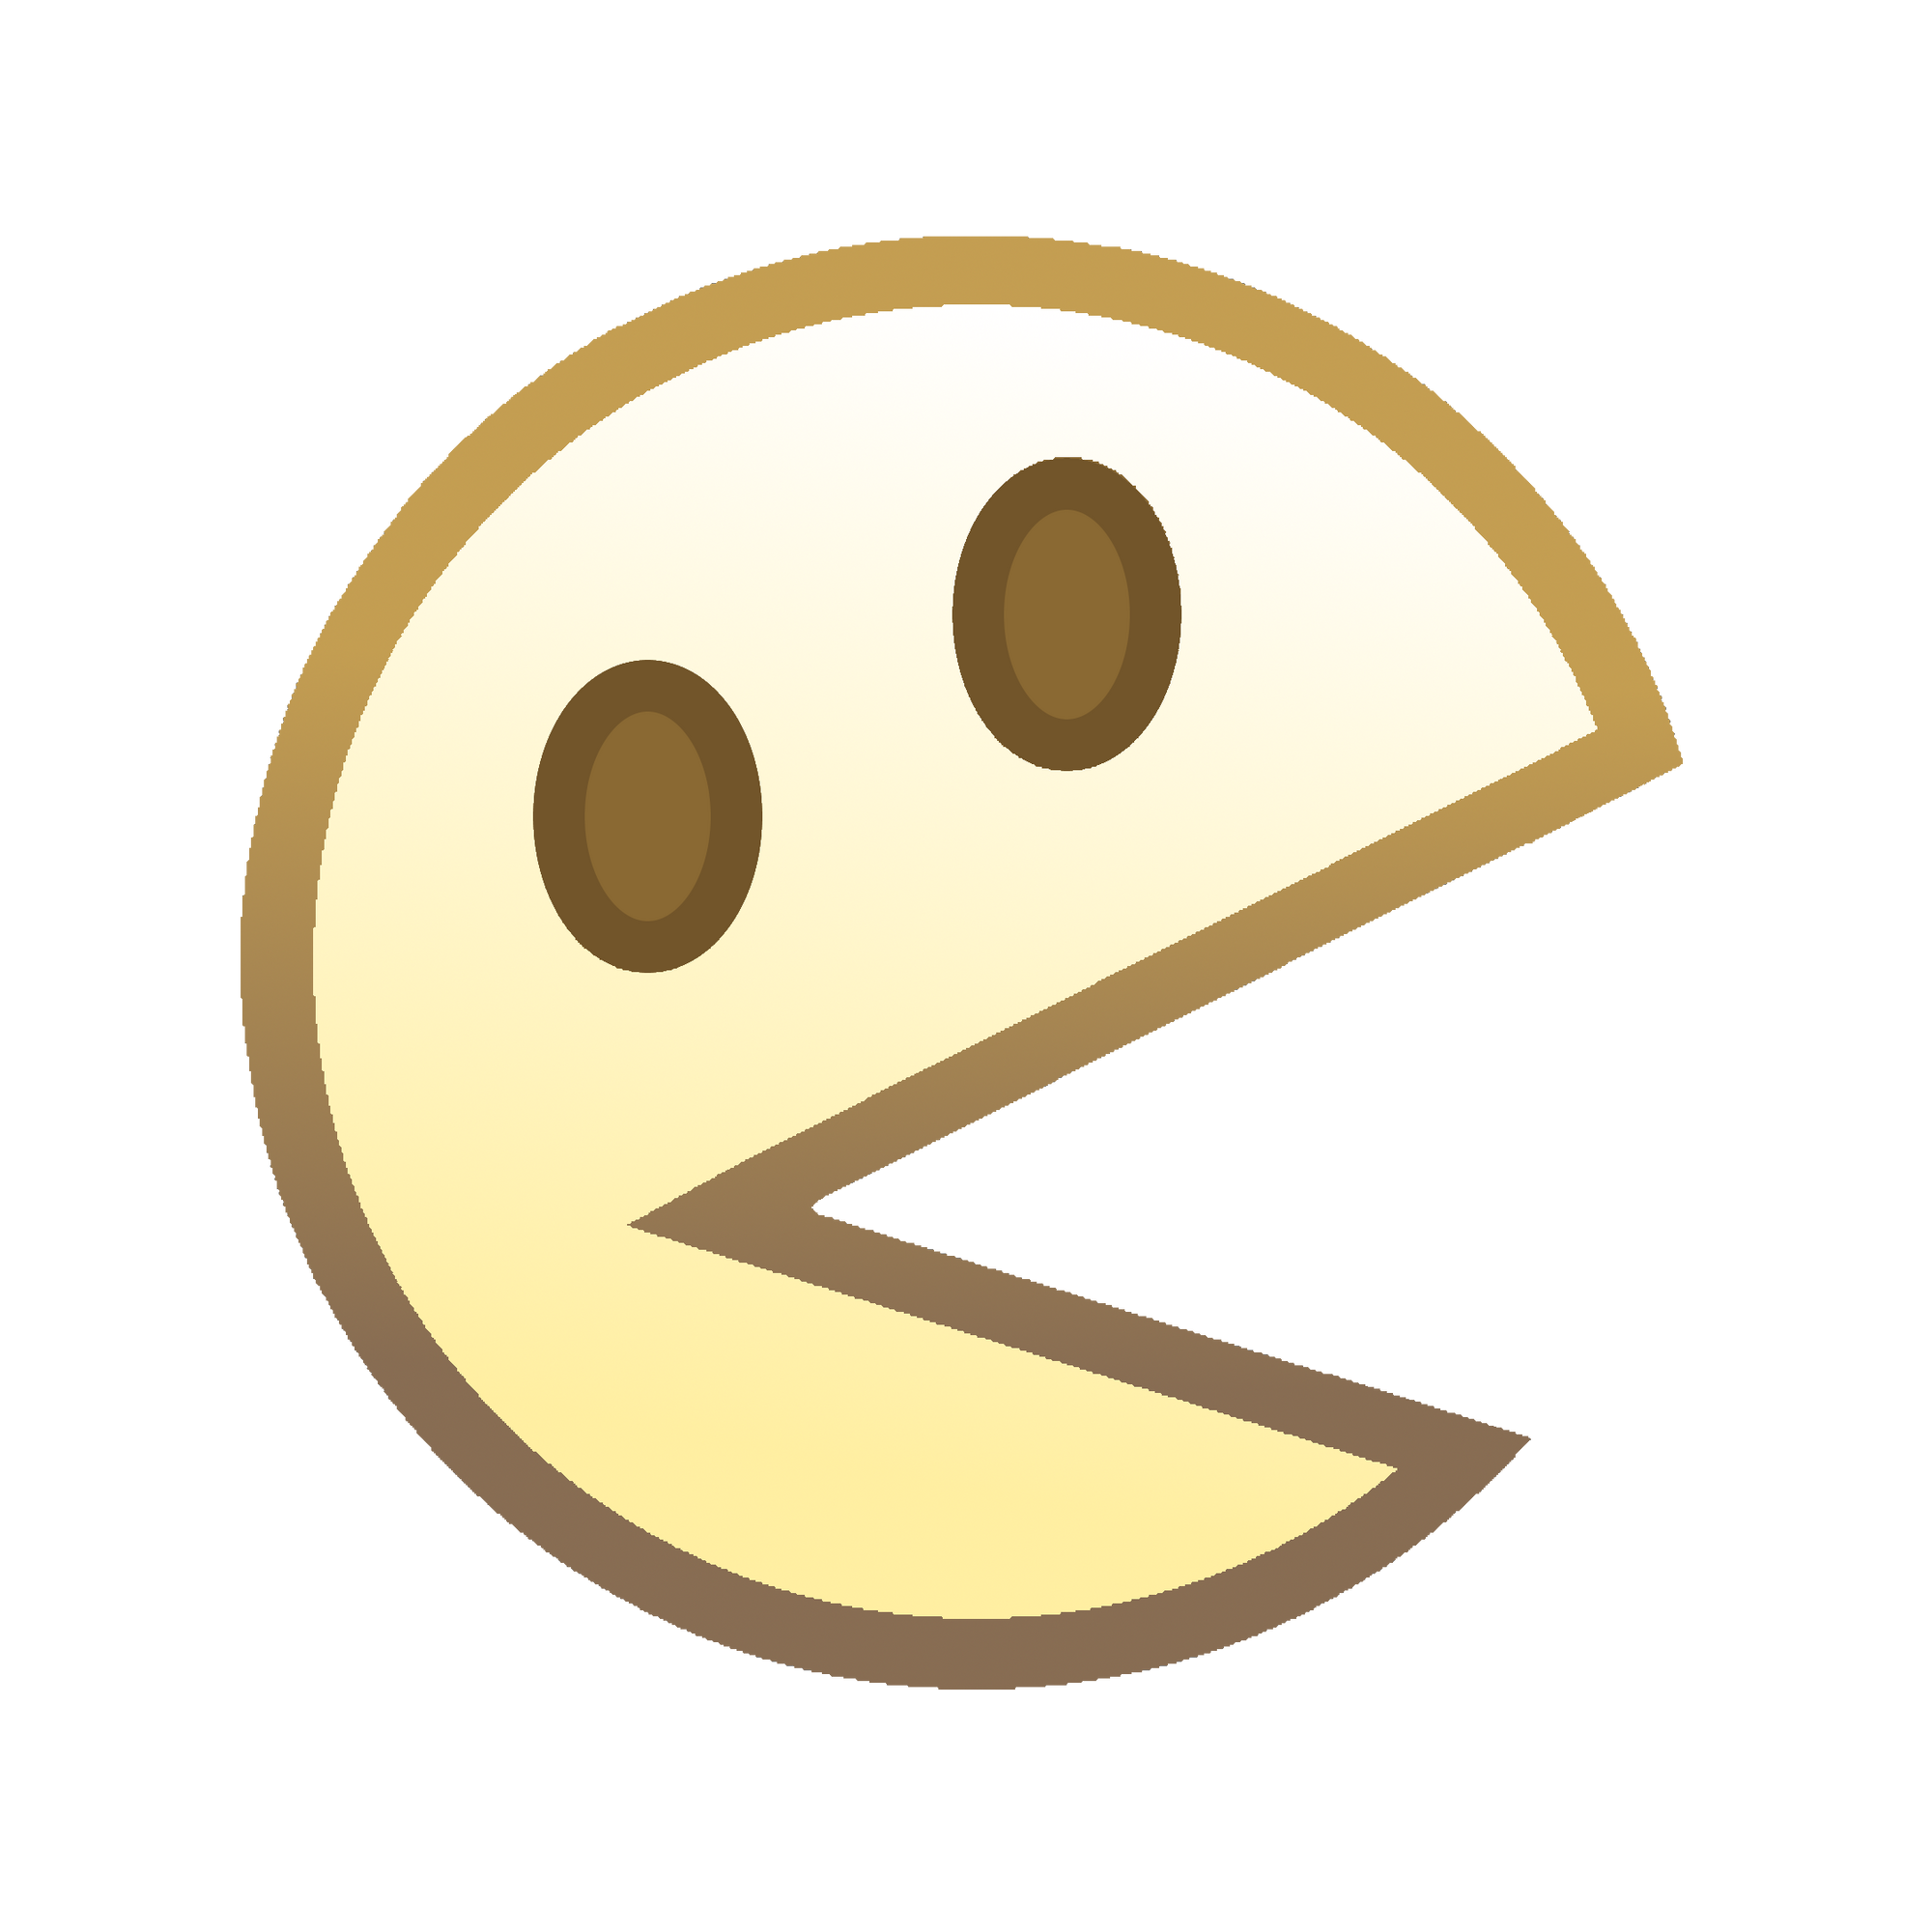 V Emoticon Pacman Wiki Memes Pedia FANDOM Powered By Wikia